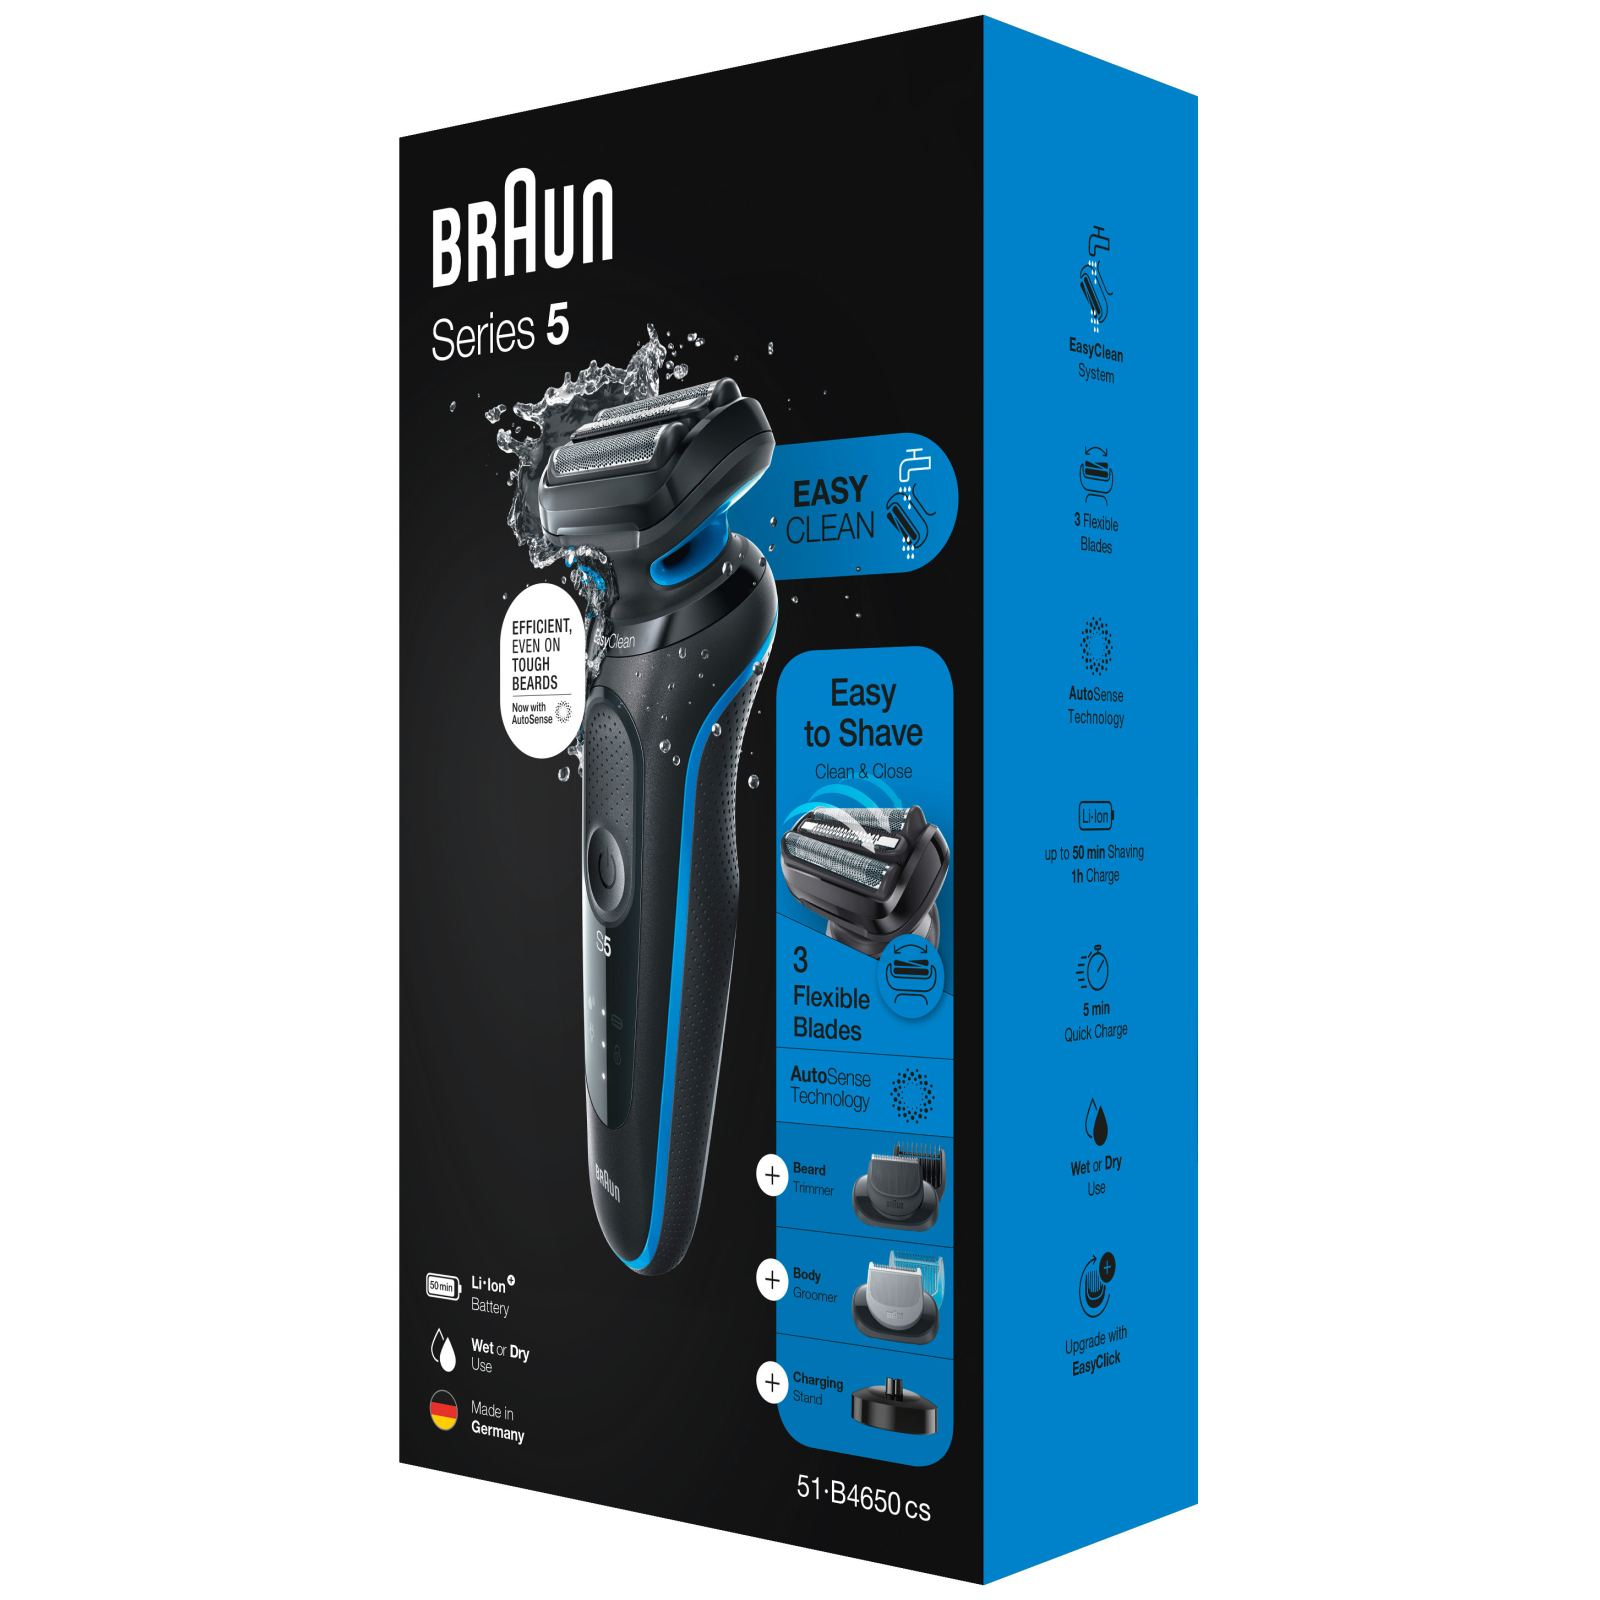 Электробритва Braun Series 5 51-B4650cs BLACK / BLUE изображение 6